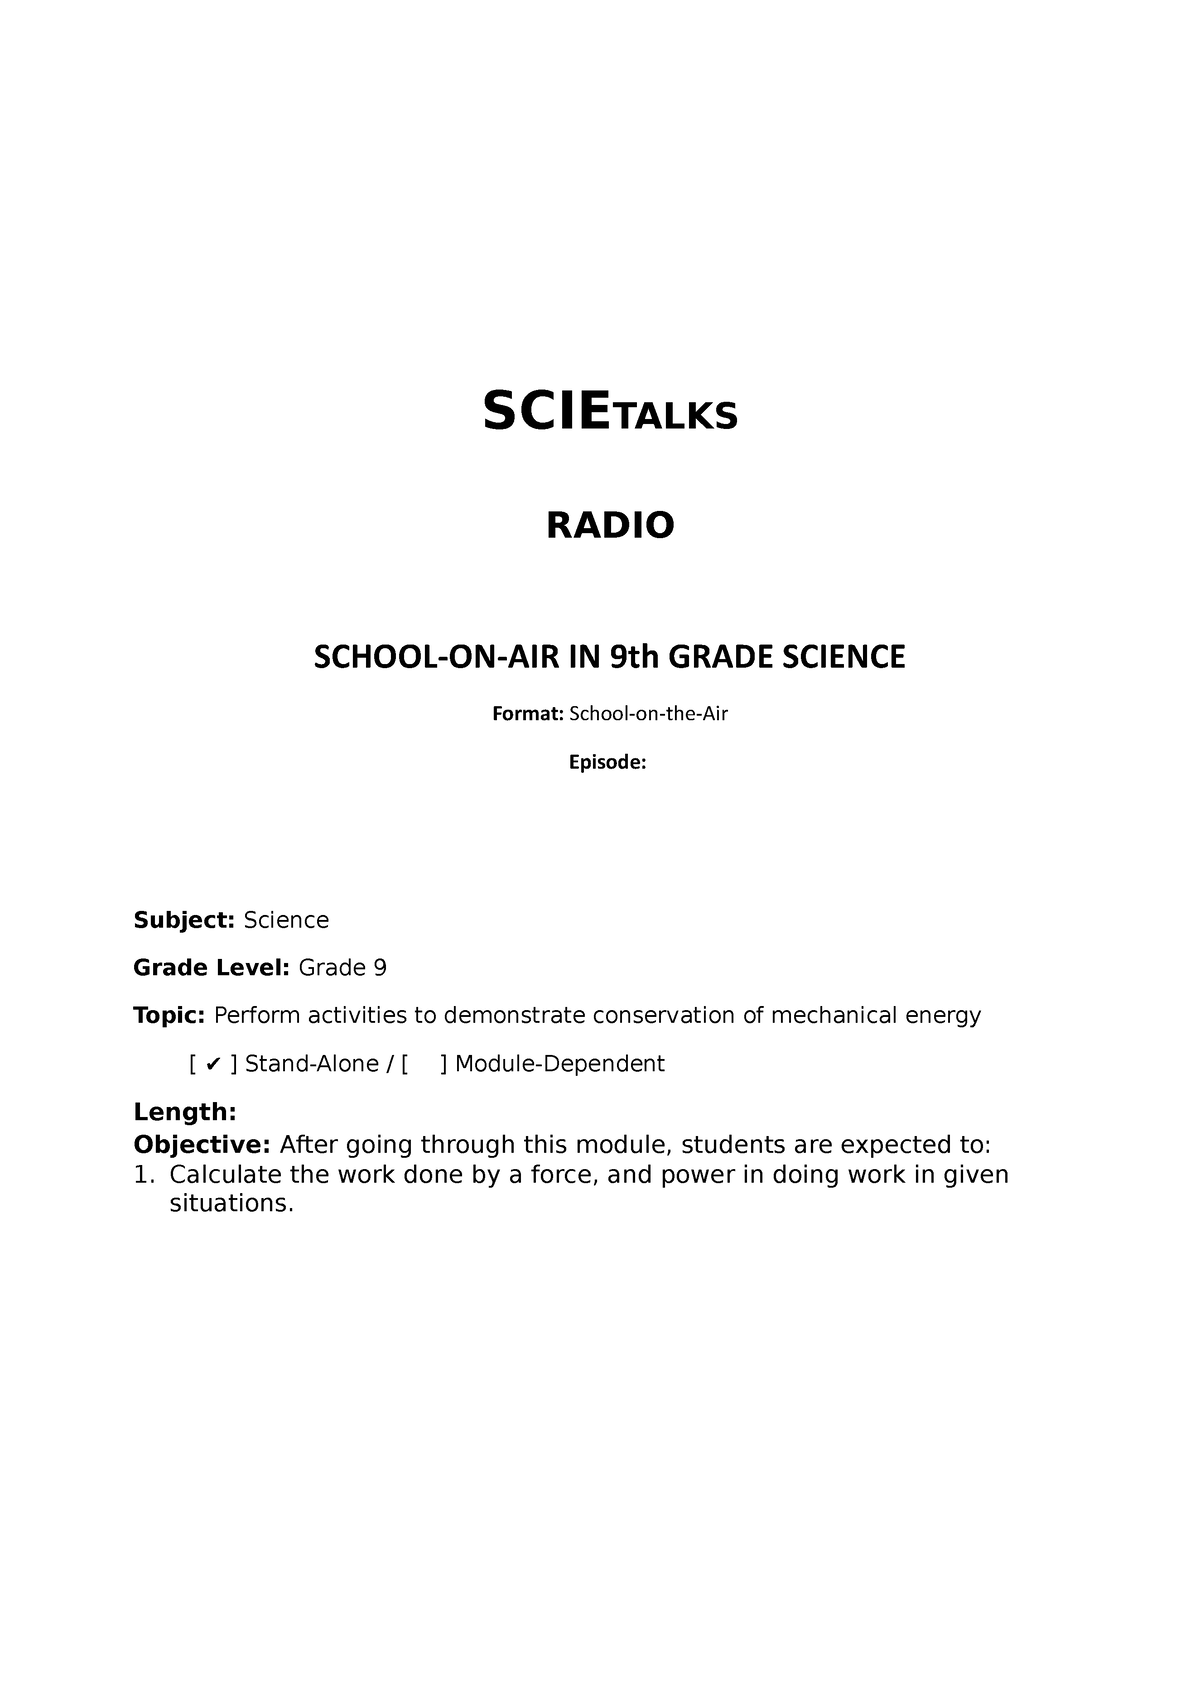 qa-done-science-9-q4w4-edited-scietalks-radio-school-on-air-in-9th